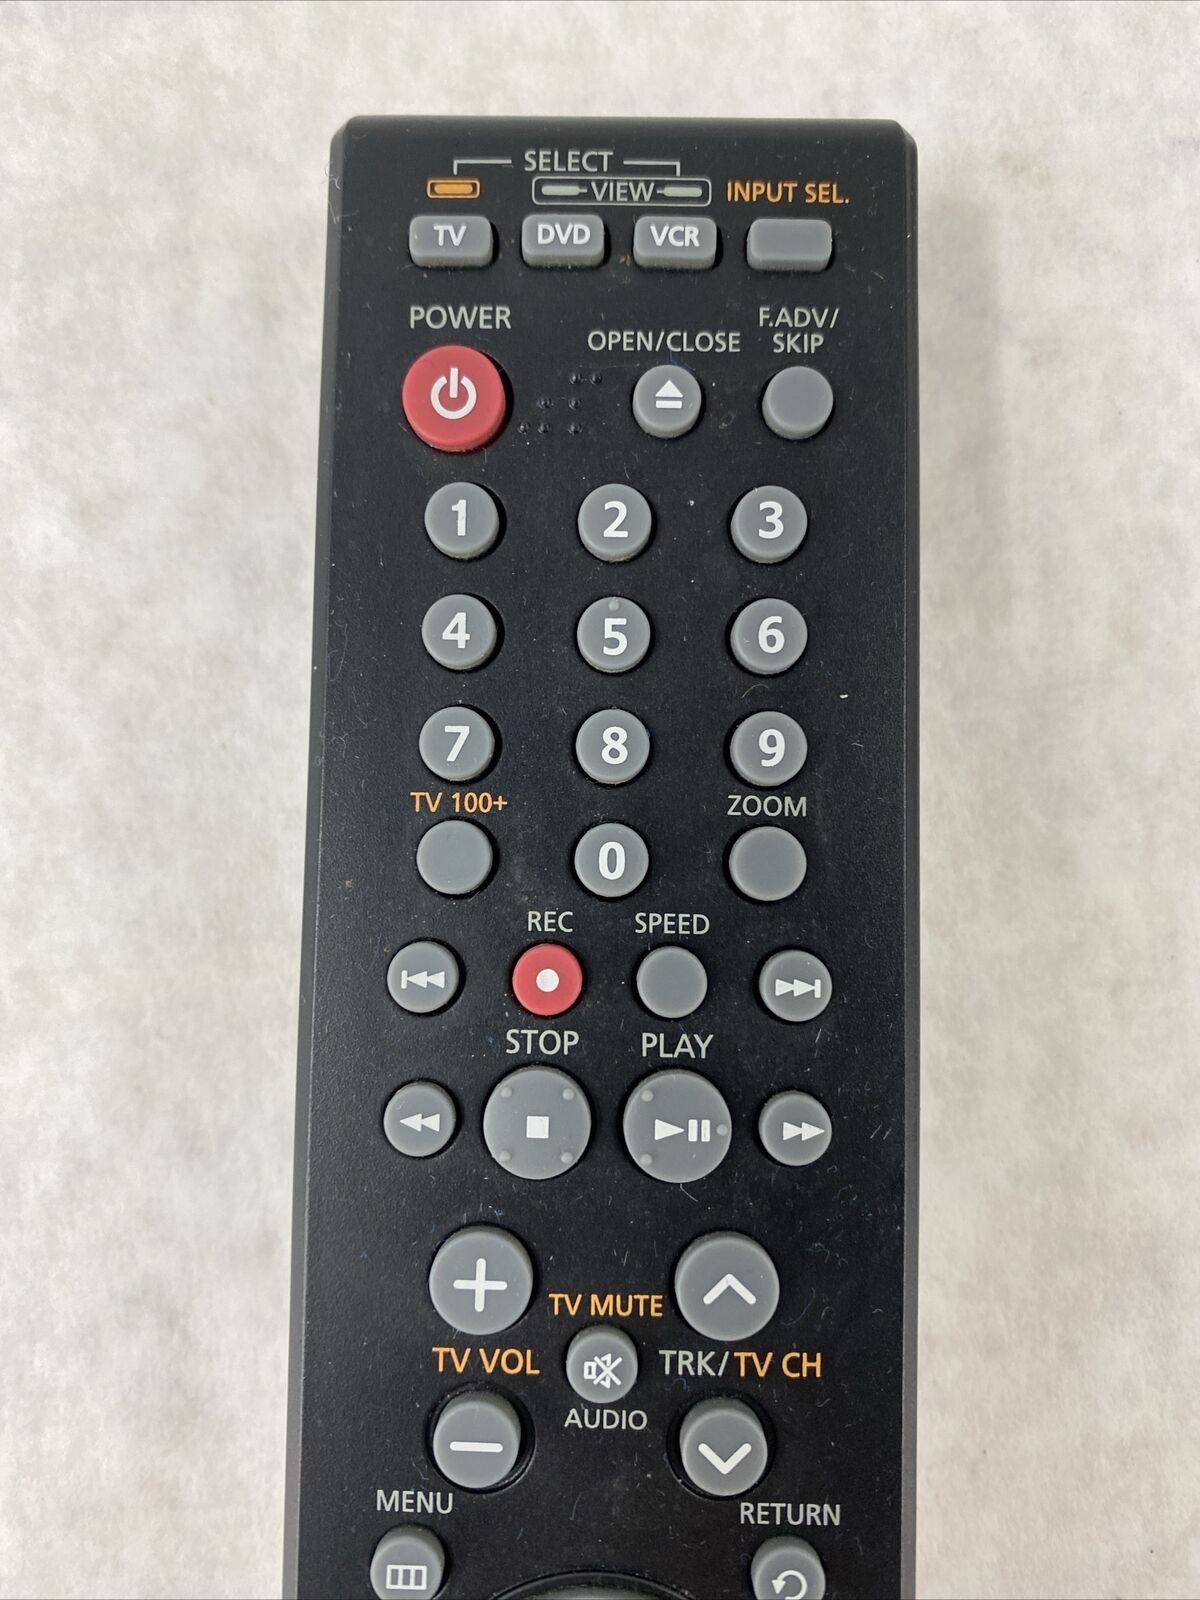 Samsung 00061J VR7147 TV DVD VCR Remote Control